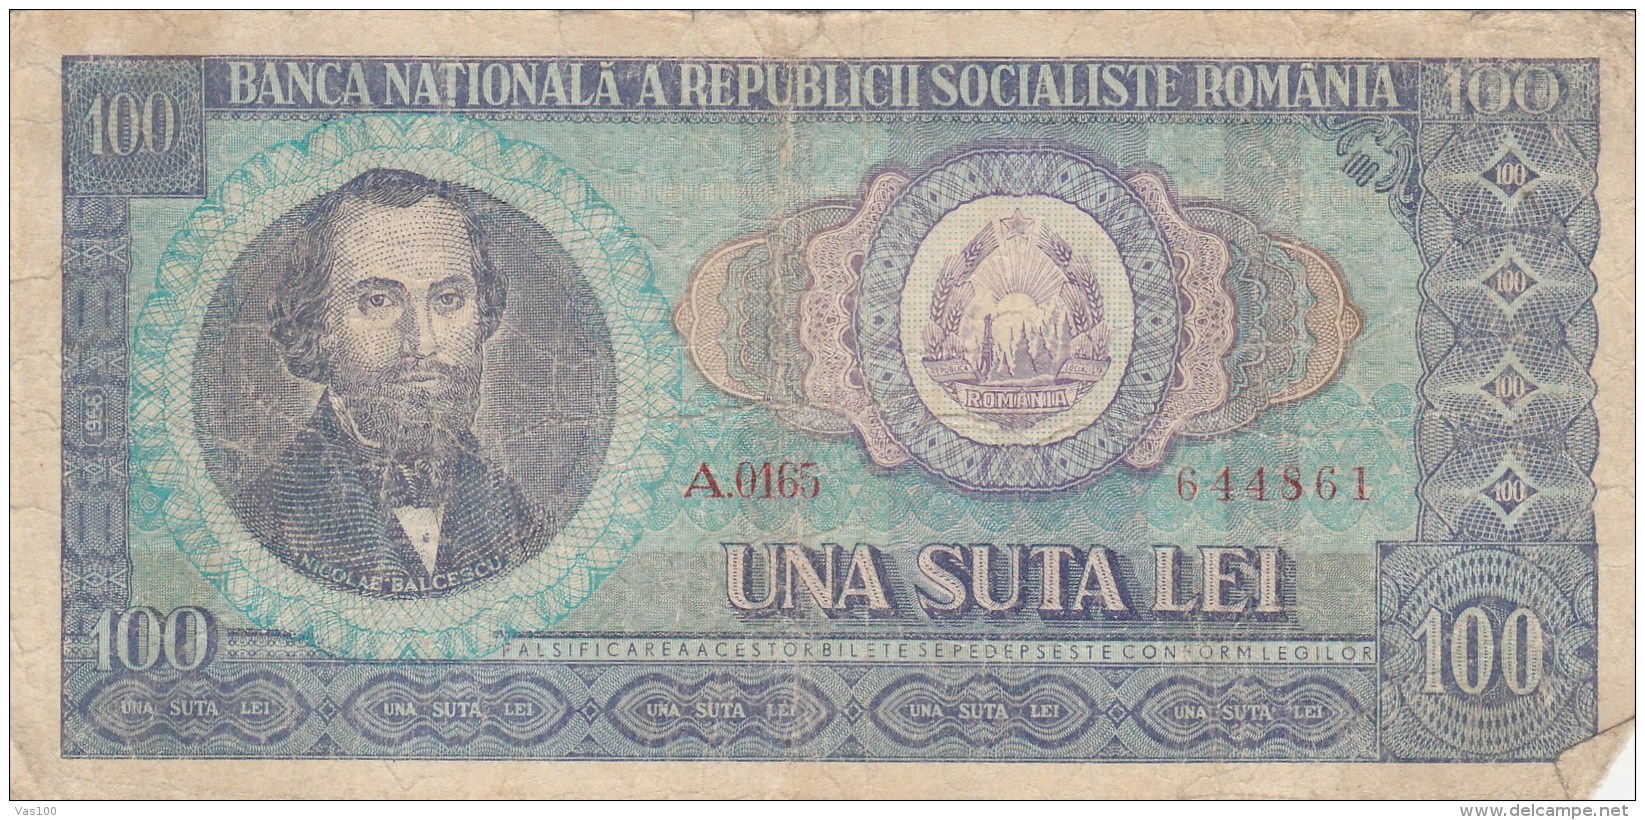 100 LEI, NICOLAE BALCESCU, SOCIALIST REPUBLIC OF ROMANIA,1966,ROMANIA. - Romania